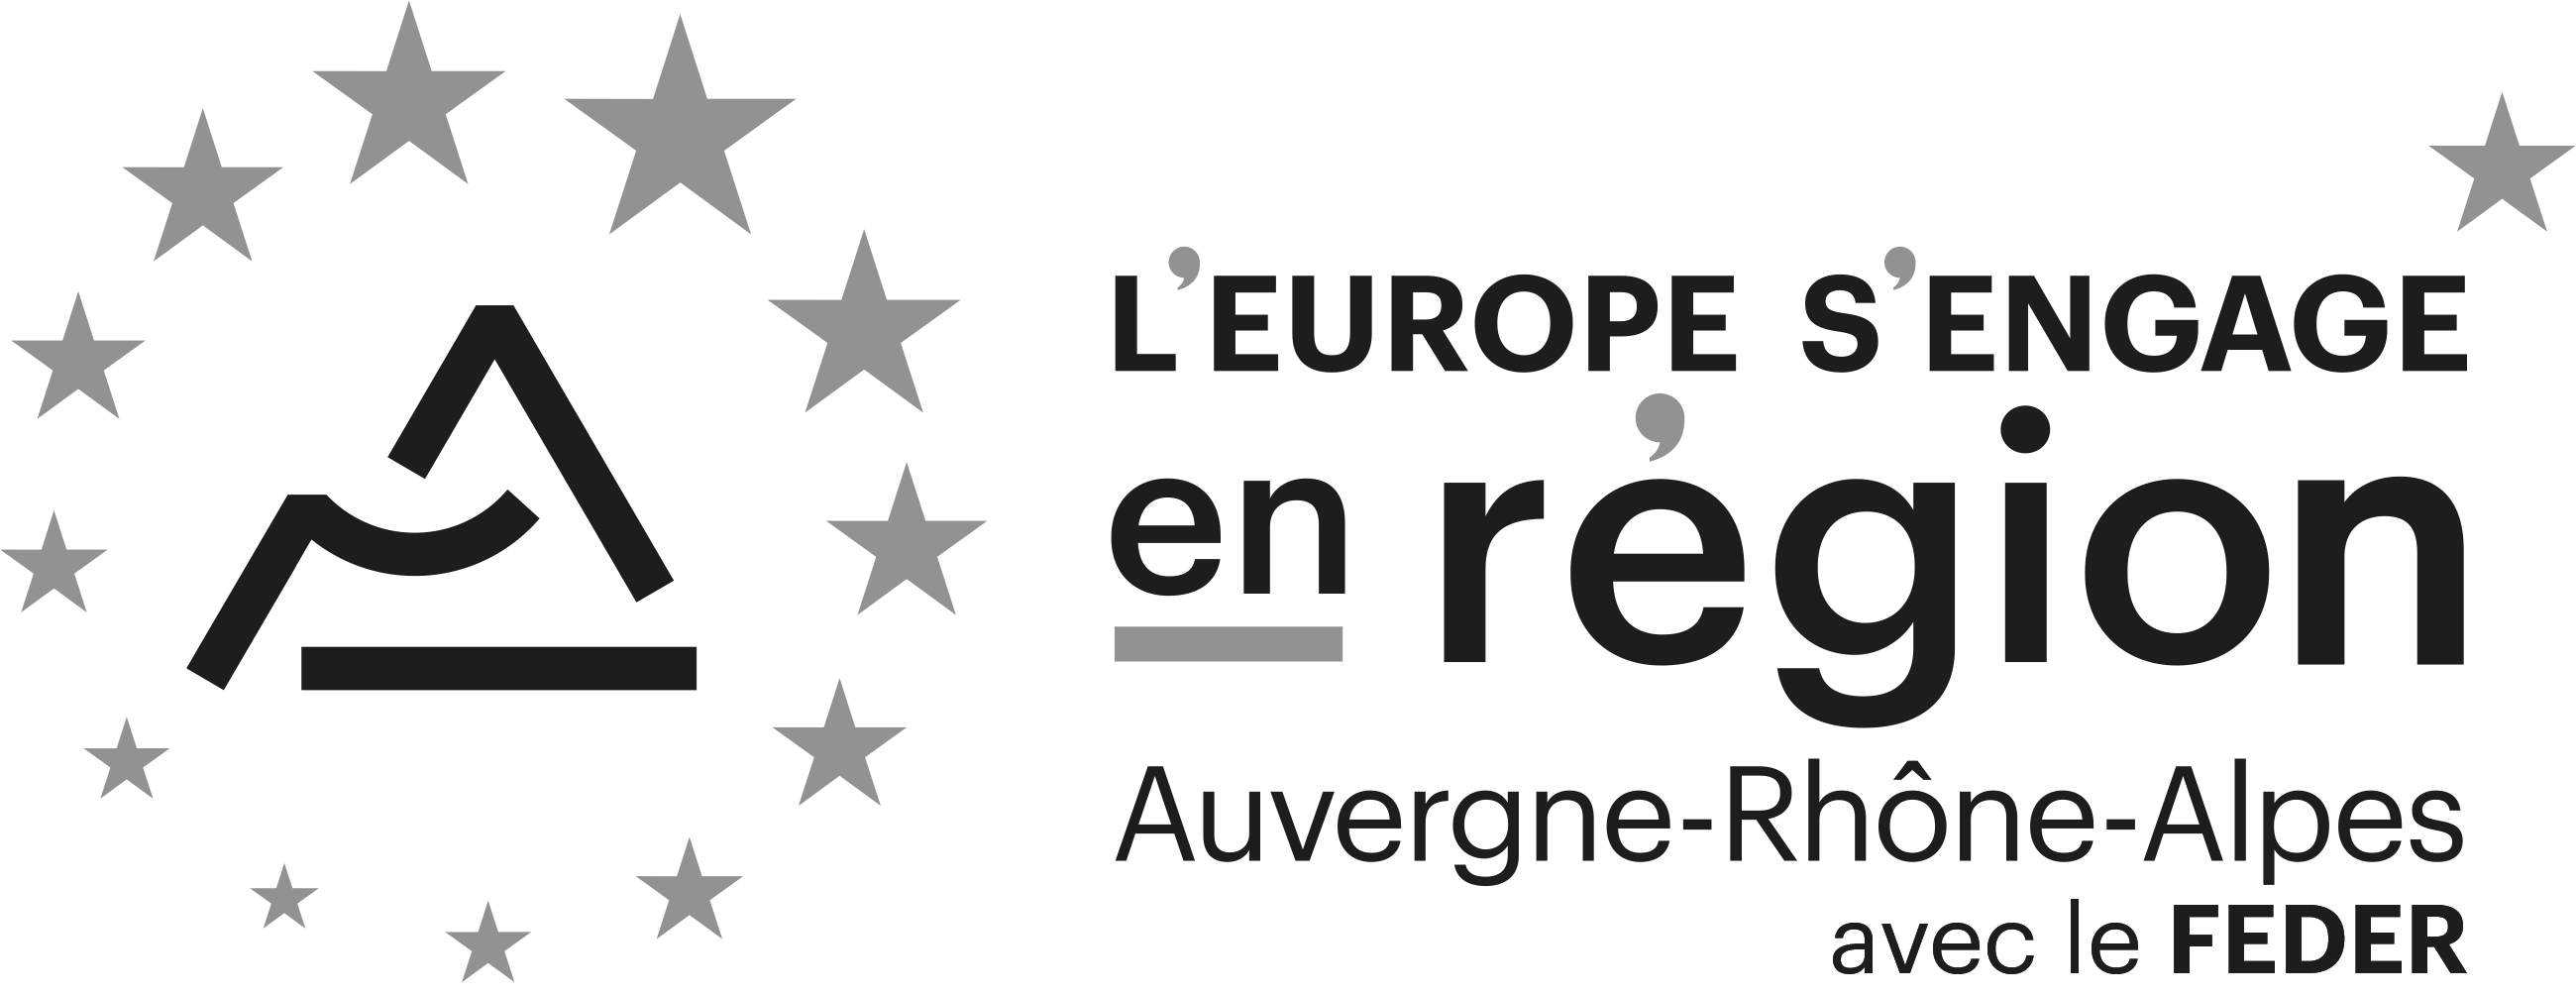 Logo_LEurope_sengage_FEDER_2017_Noir